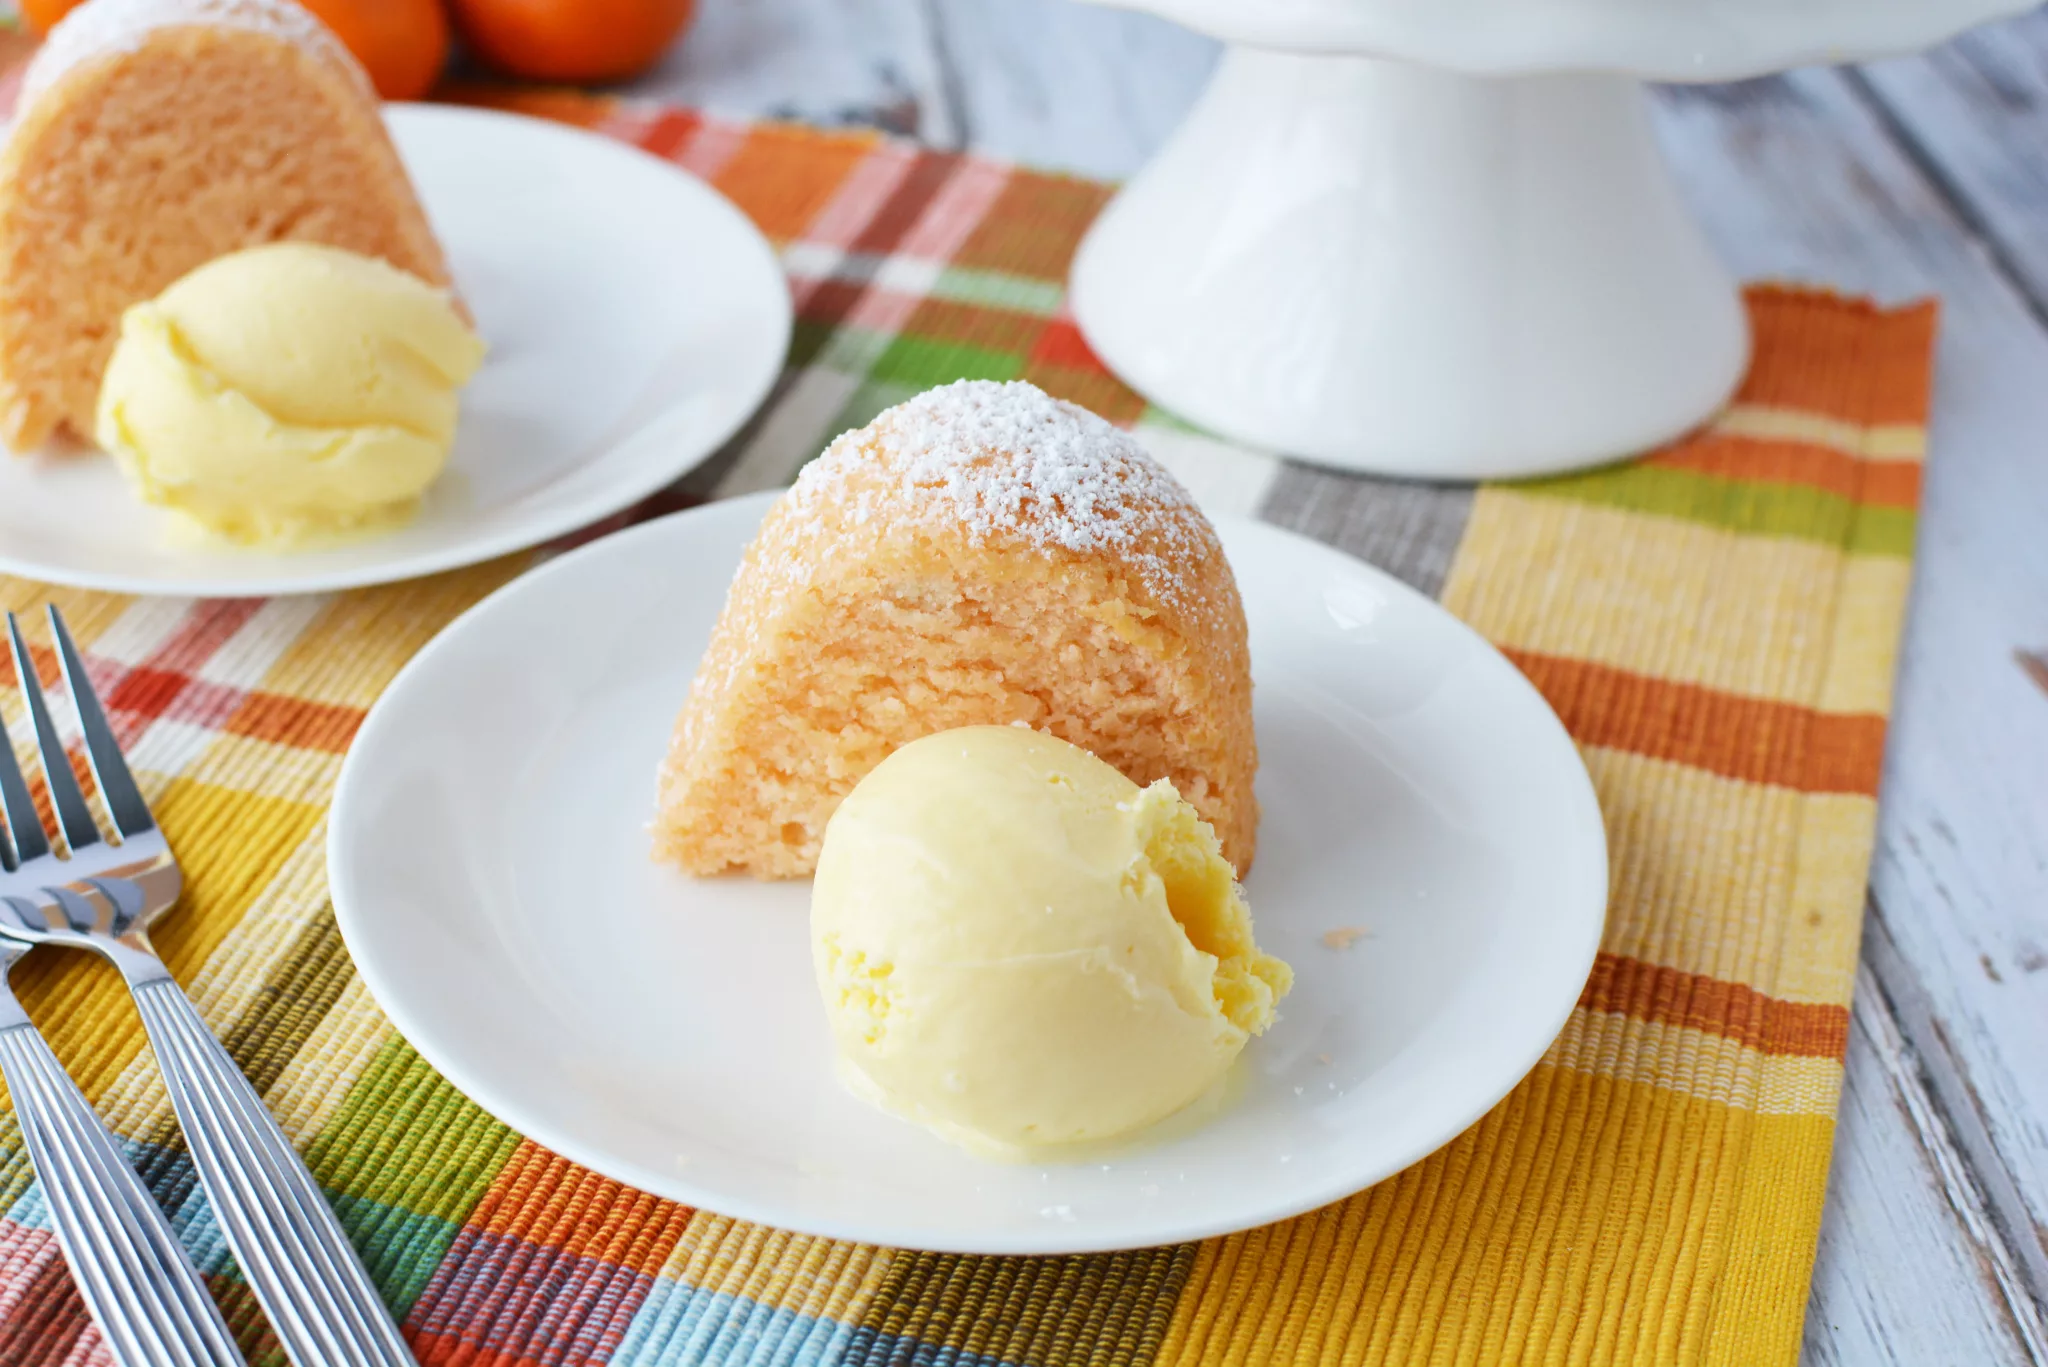 orange colored bundt cake with vanilla ice cream